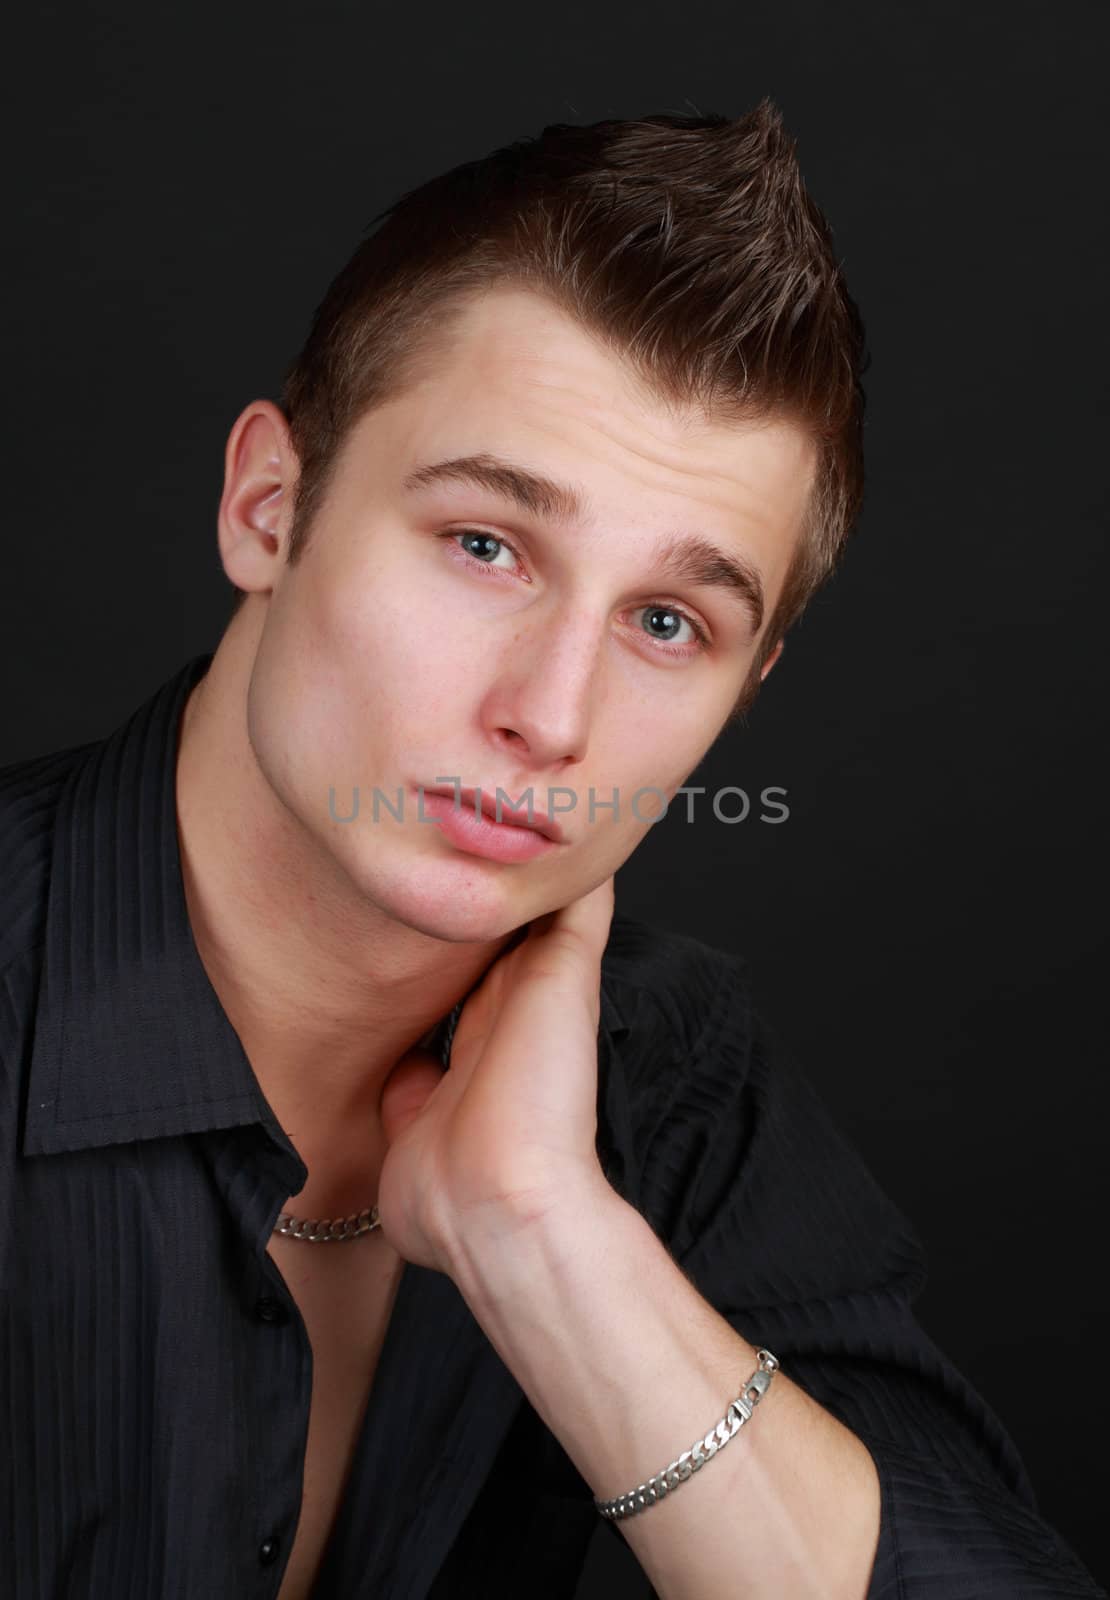 closeup portrait of a young caucasian man